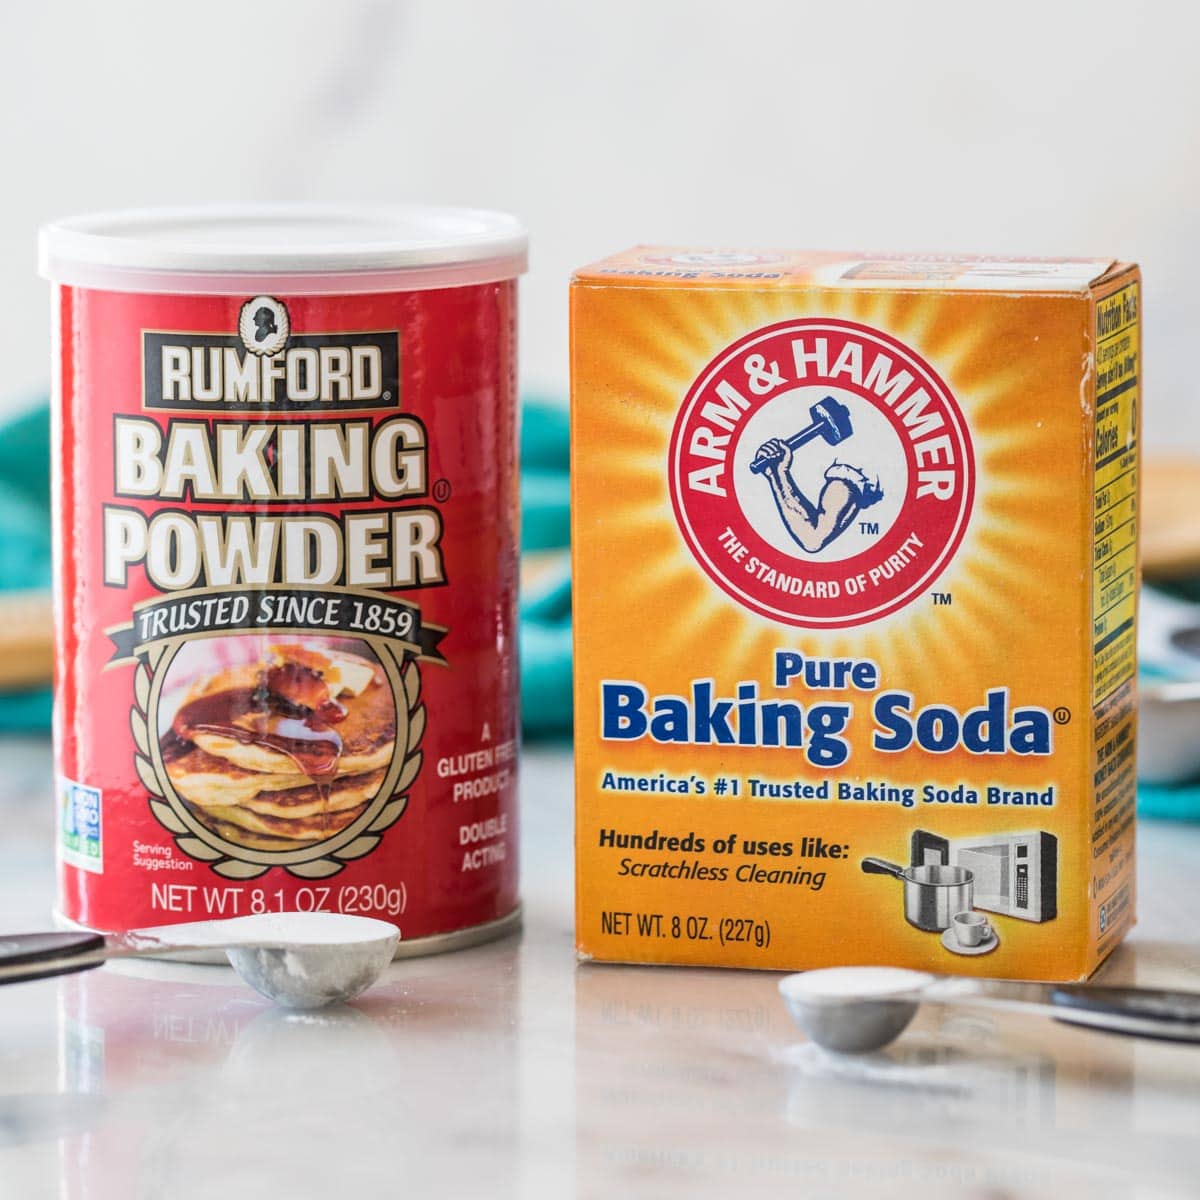 Baking Soda vs. Baking Powder - Life's Little Sweets